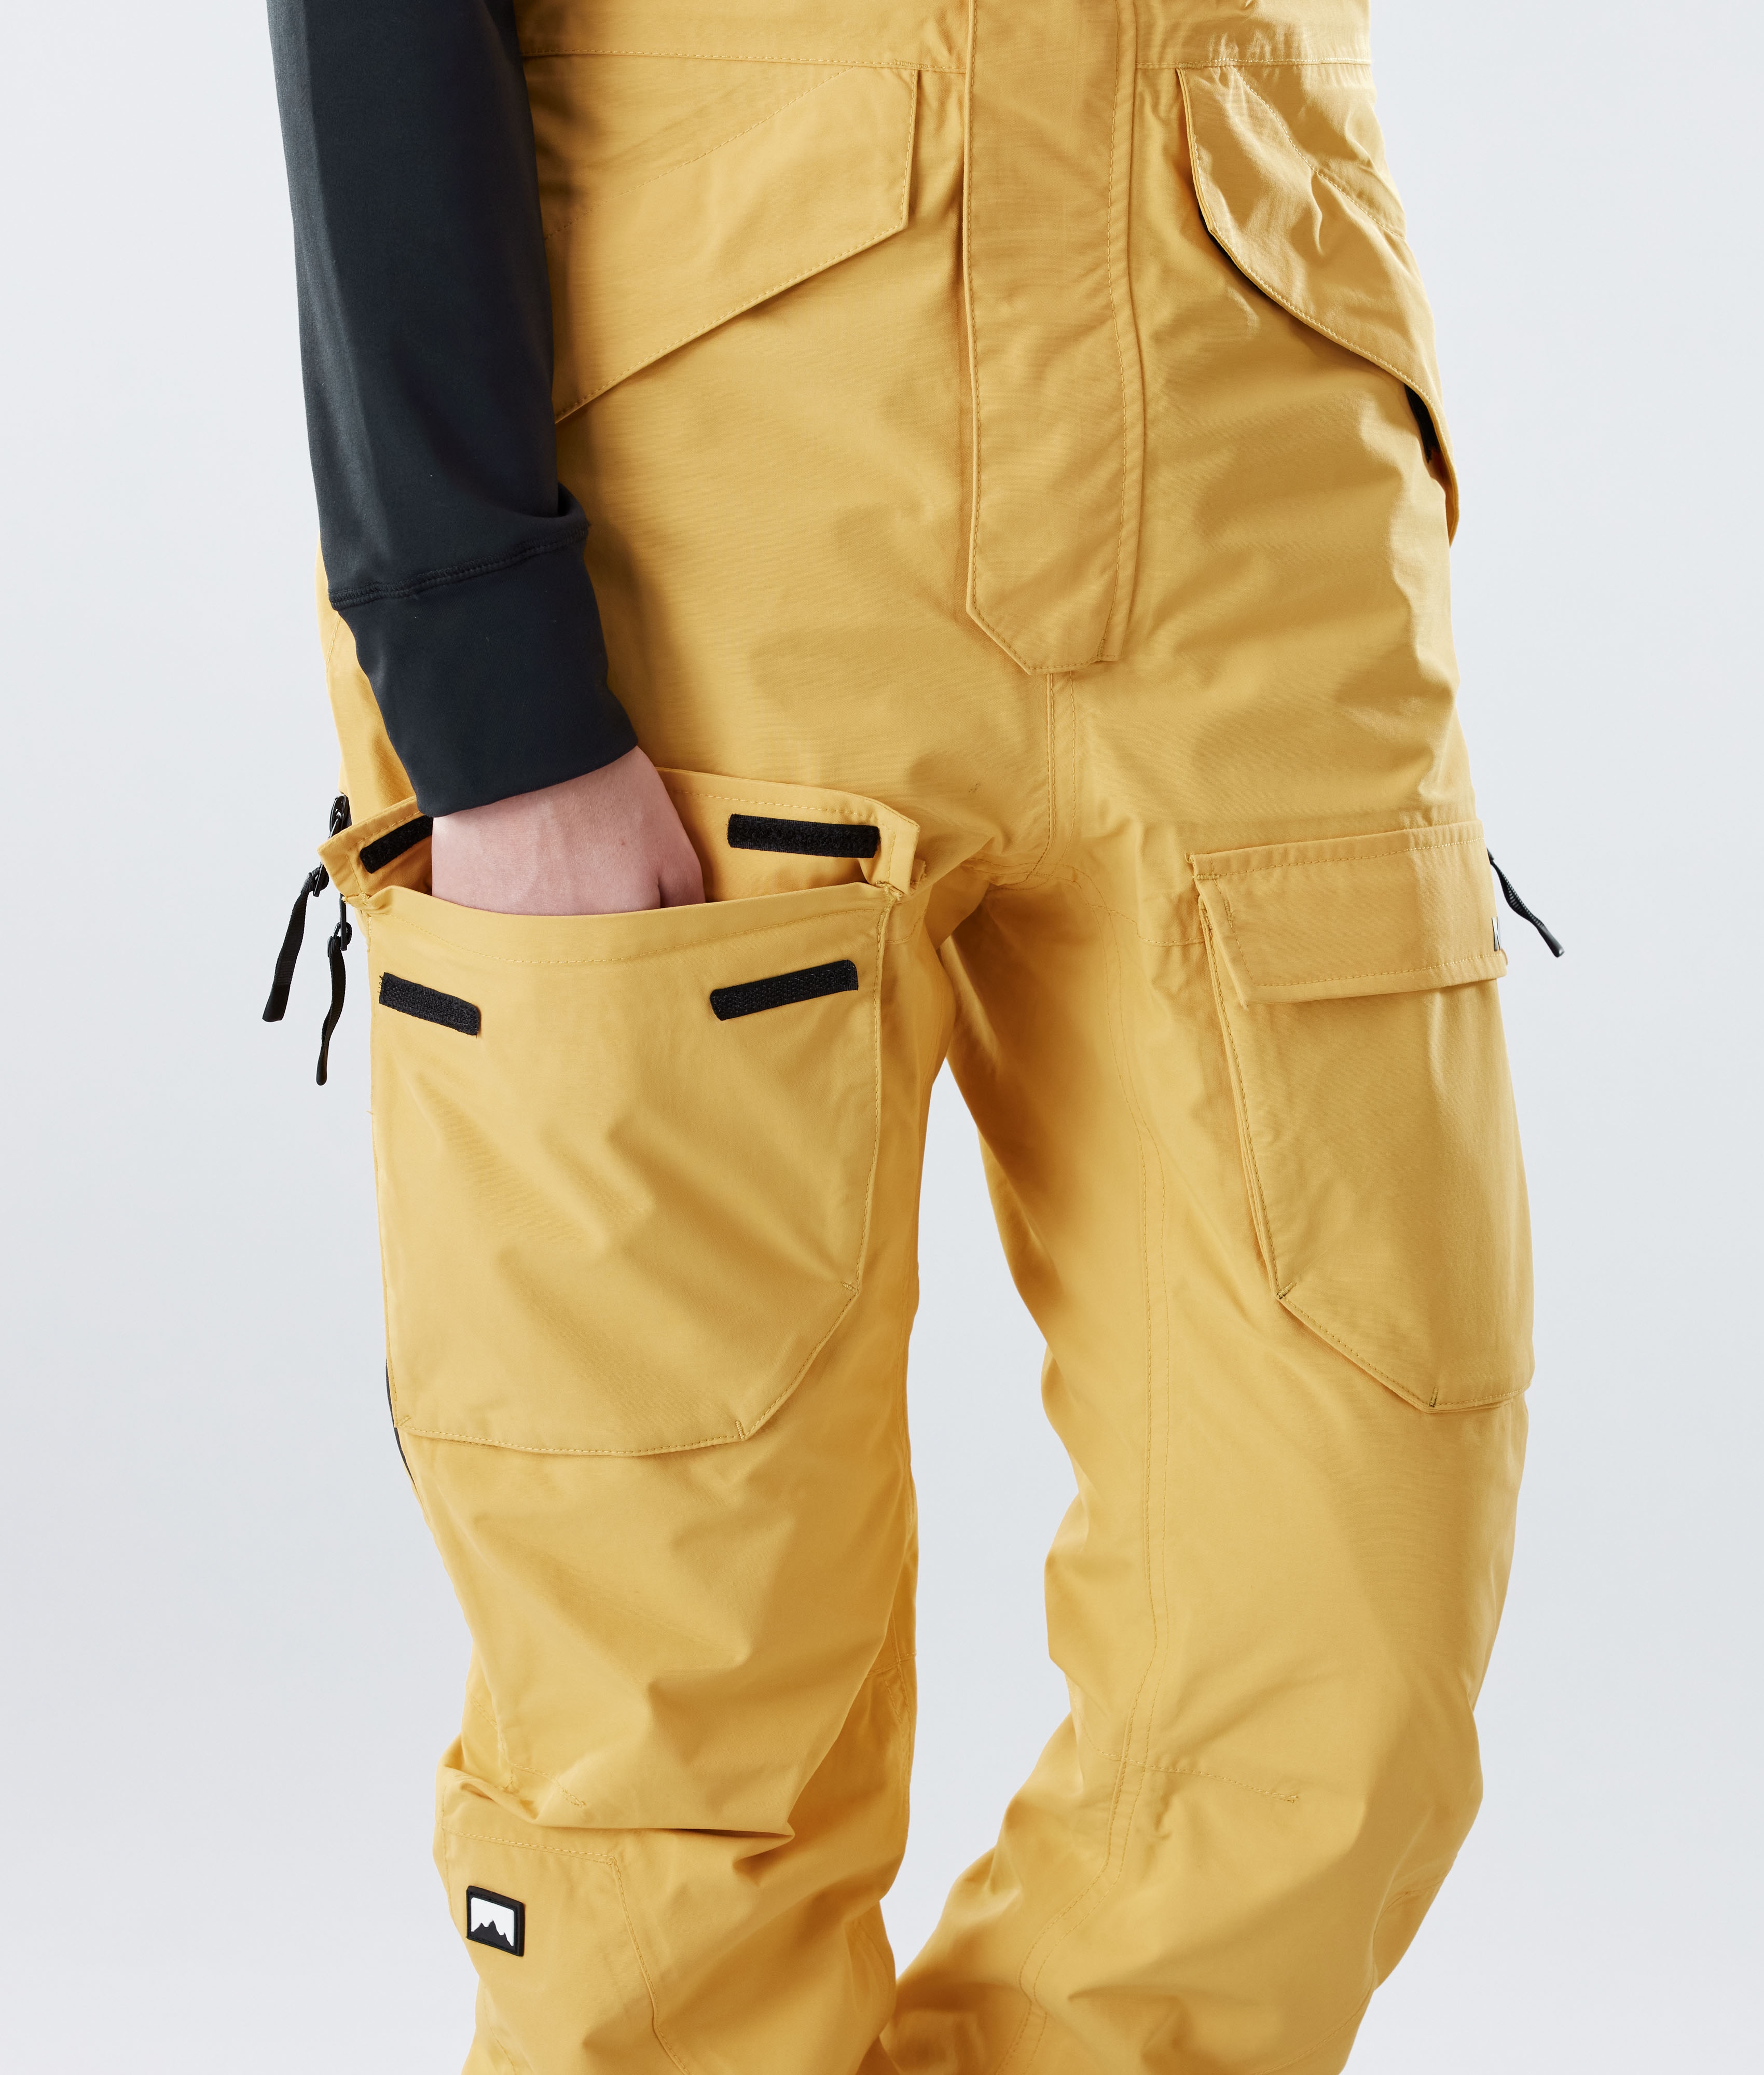 OTU Ski Snow Puffer Pants Yellow Medium - Athletic apparel